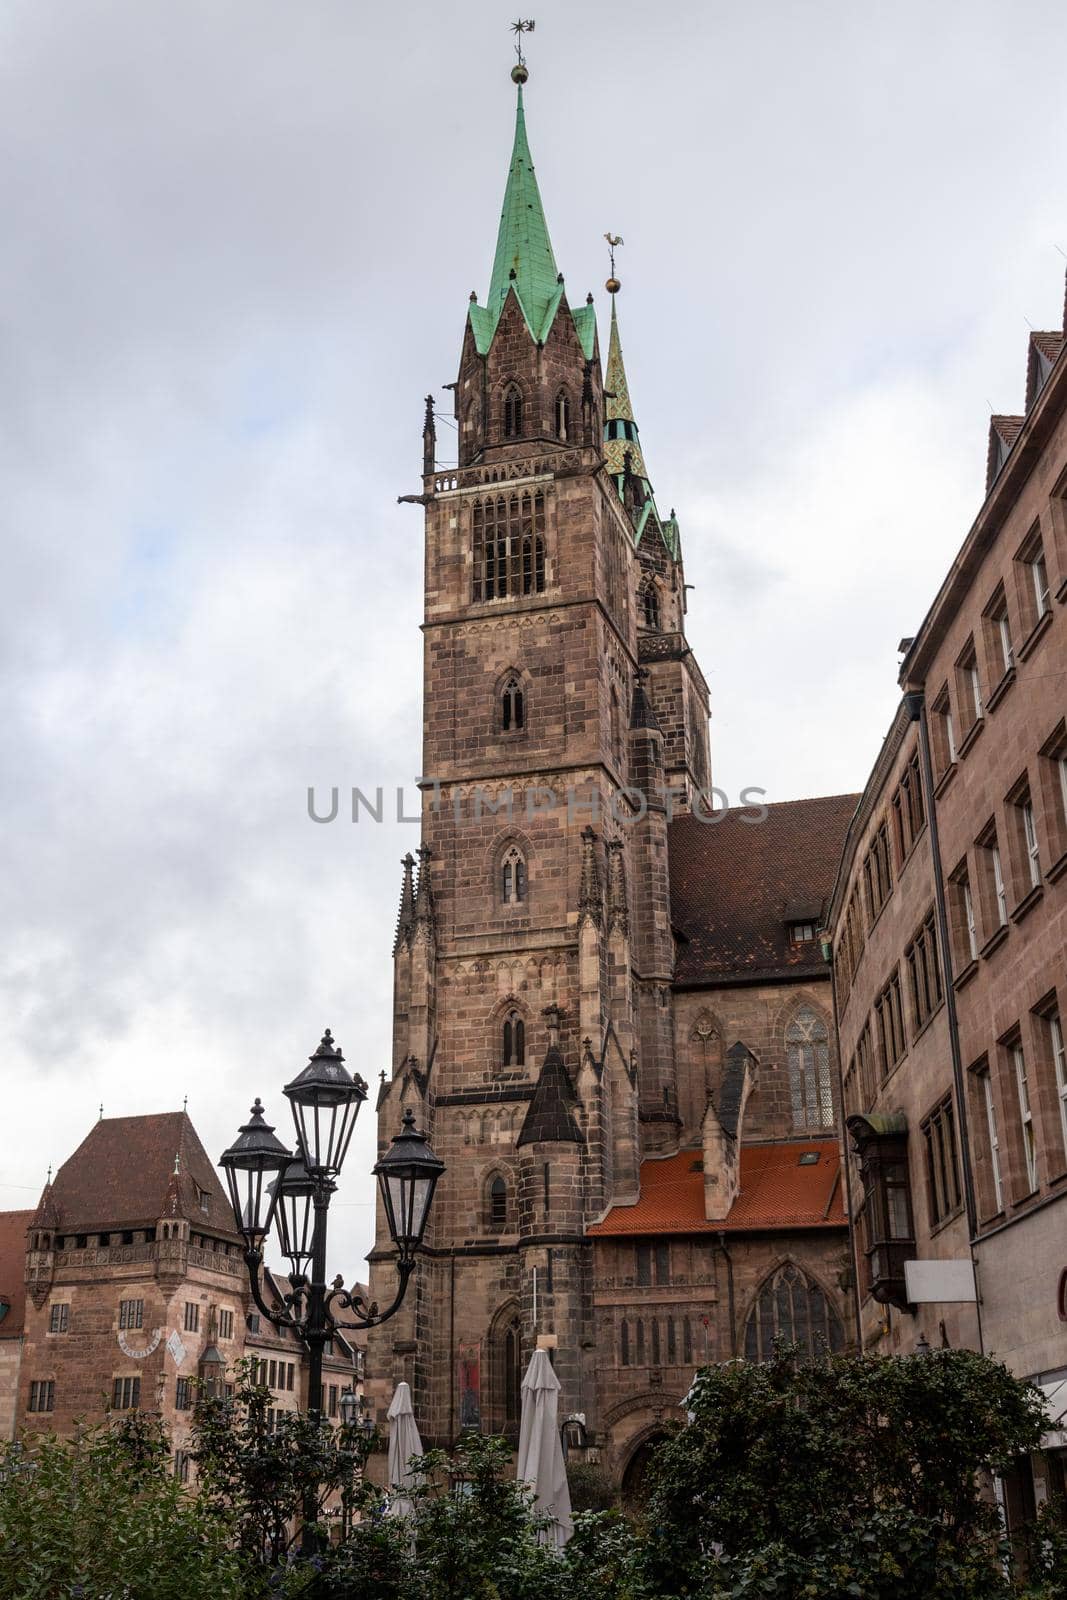 St. Lorenz church in the city Nuremberg, Bavaria, Germany by reinerc